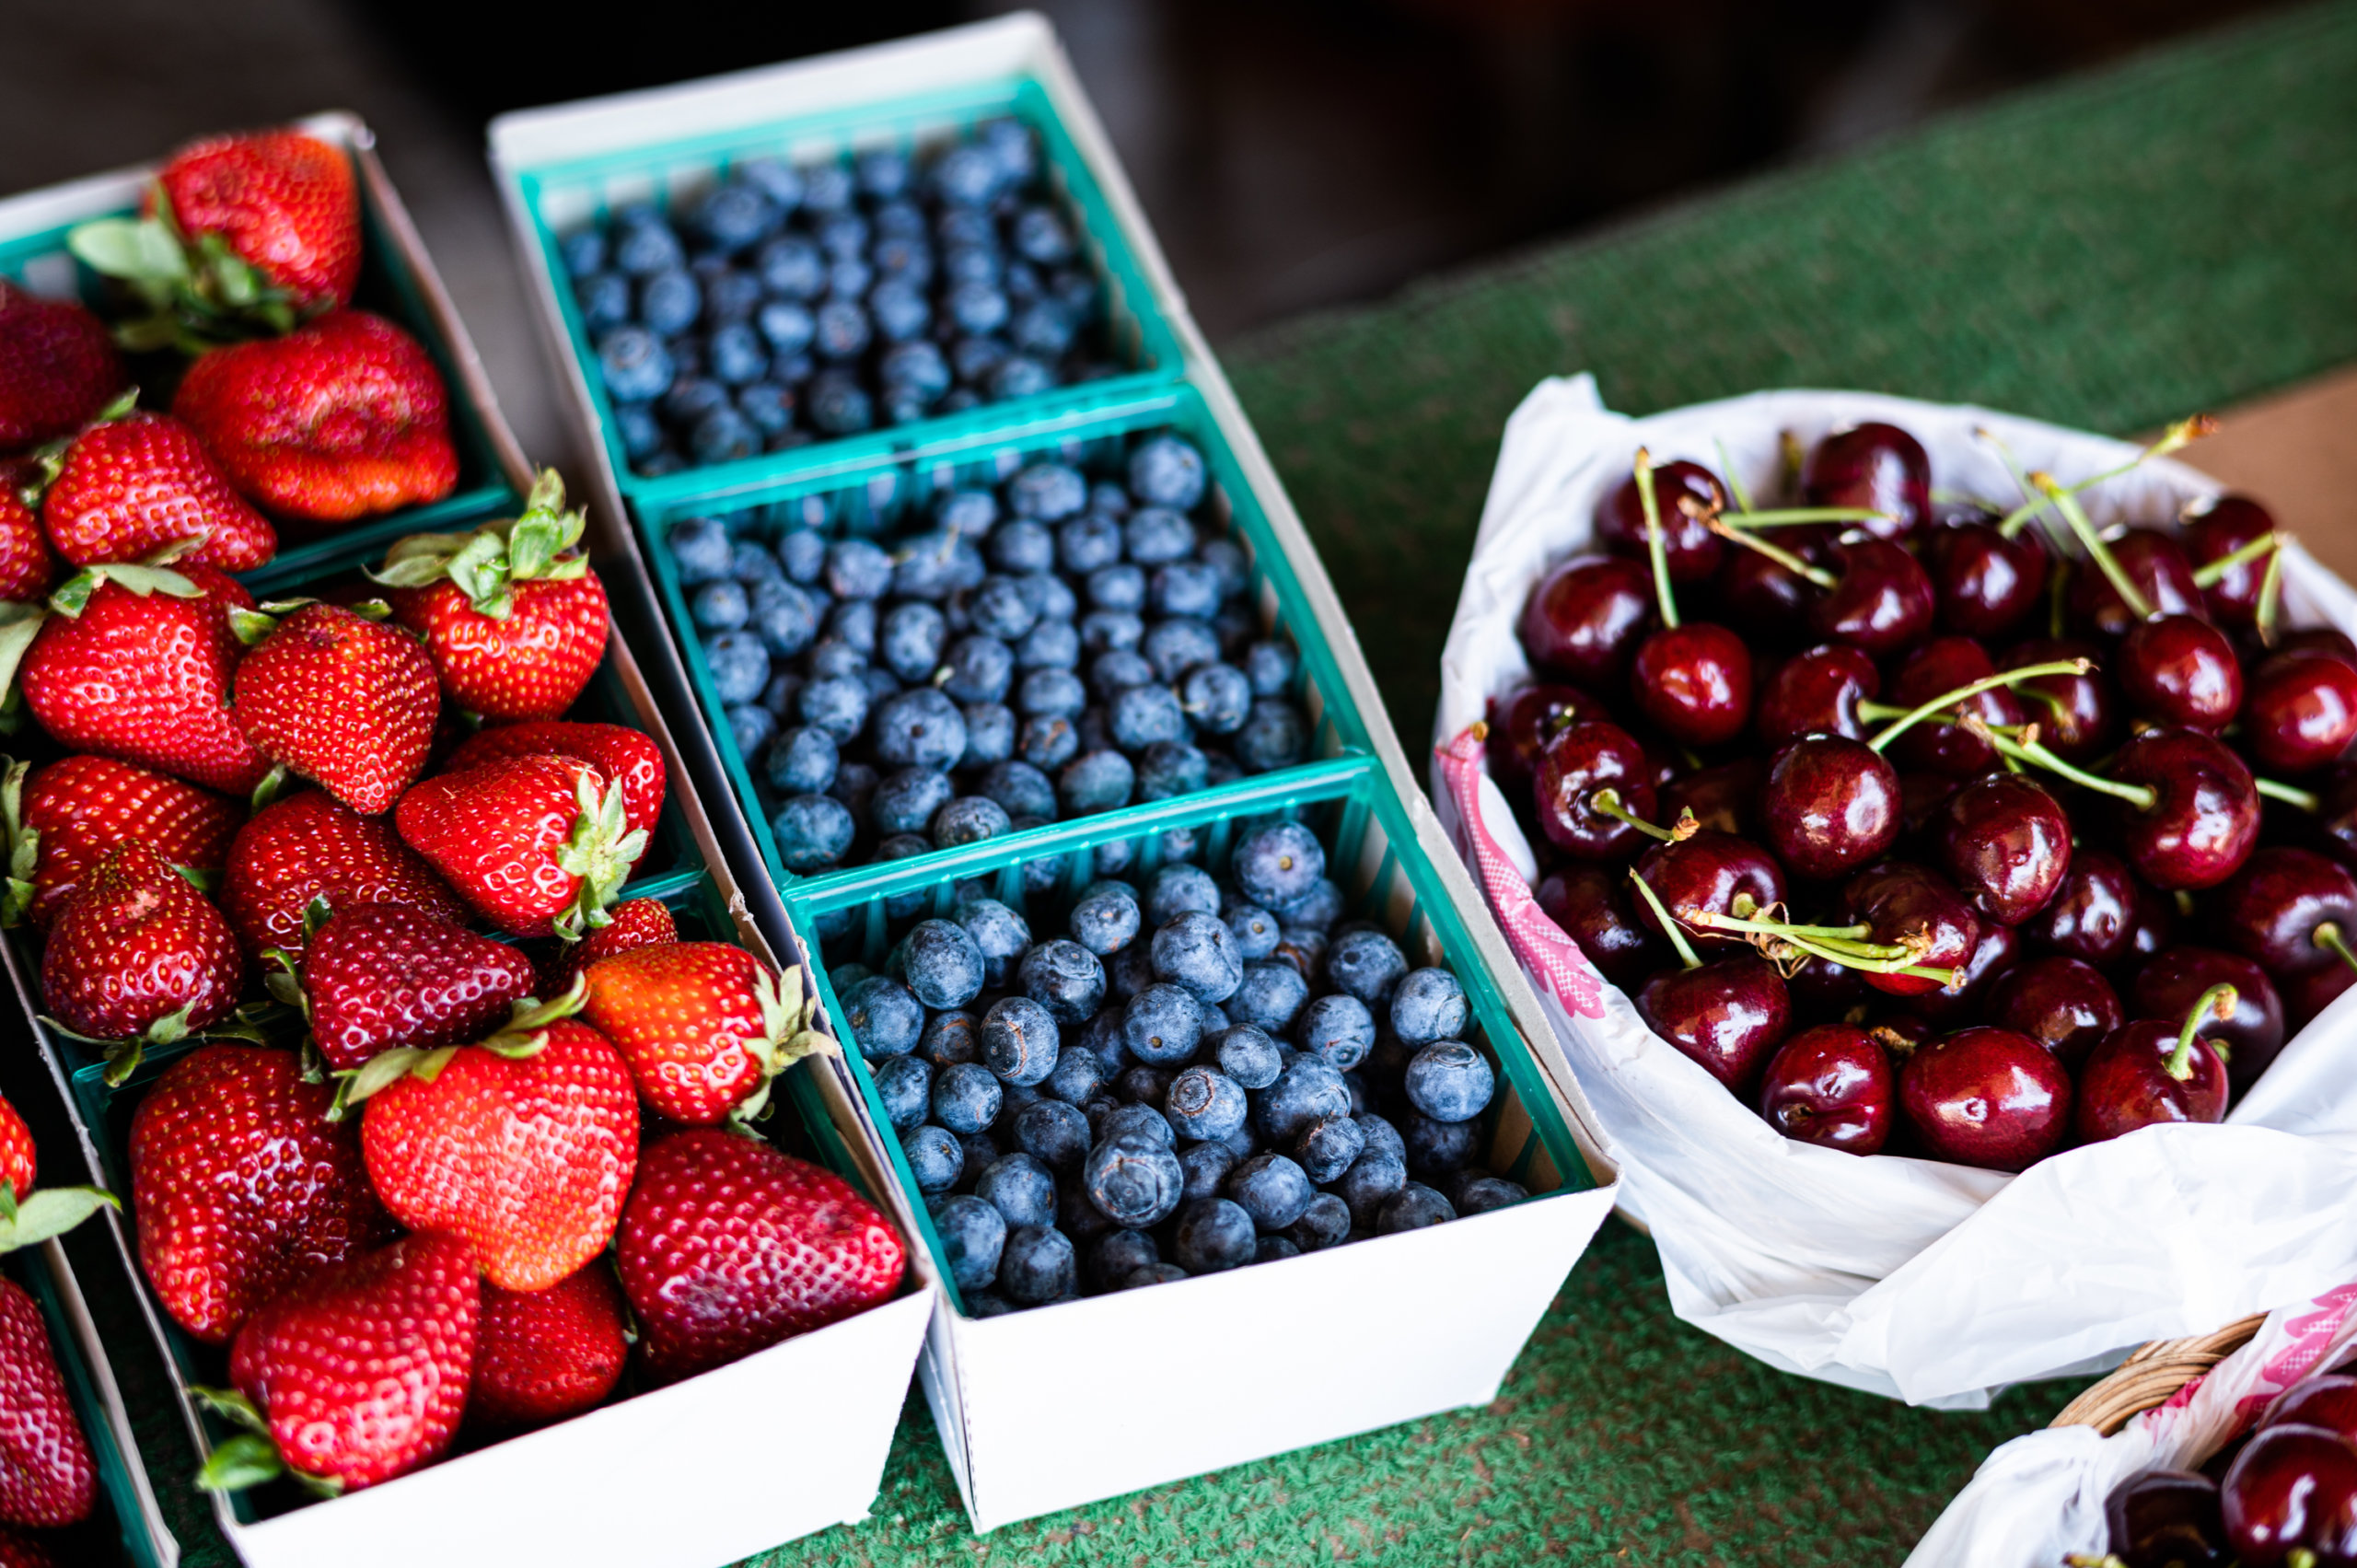 Fresh strawberries, blueberries and cherries grown in Madera, California